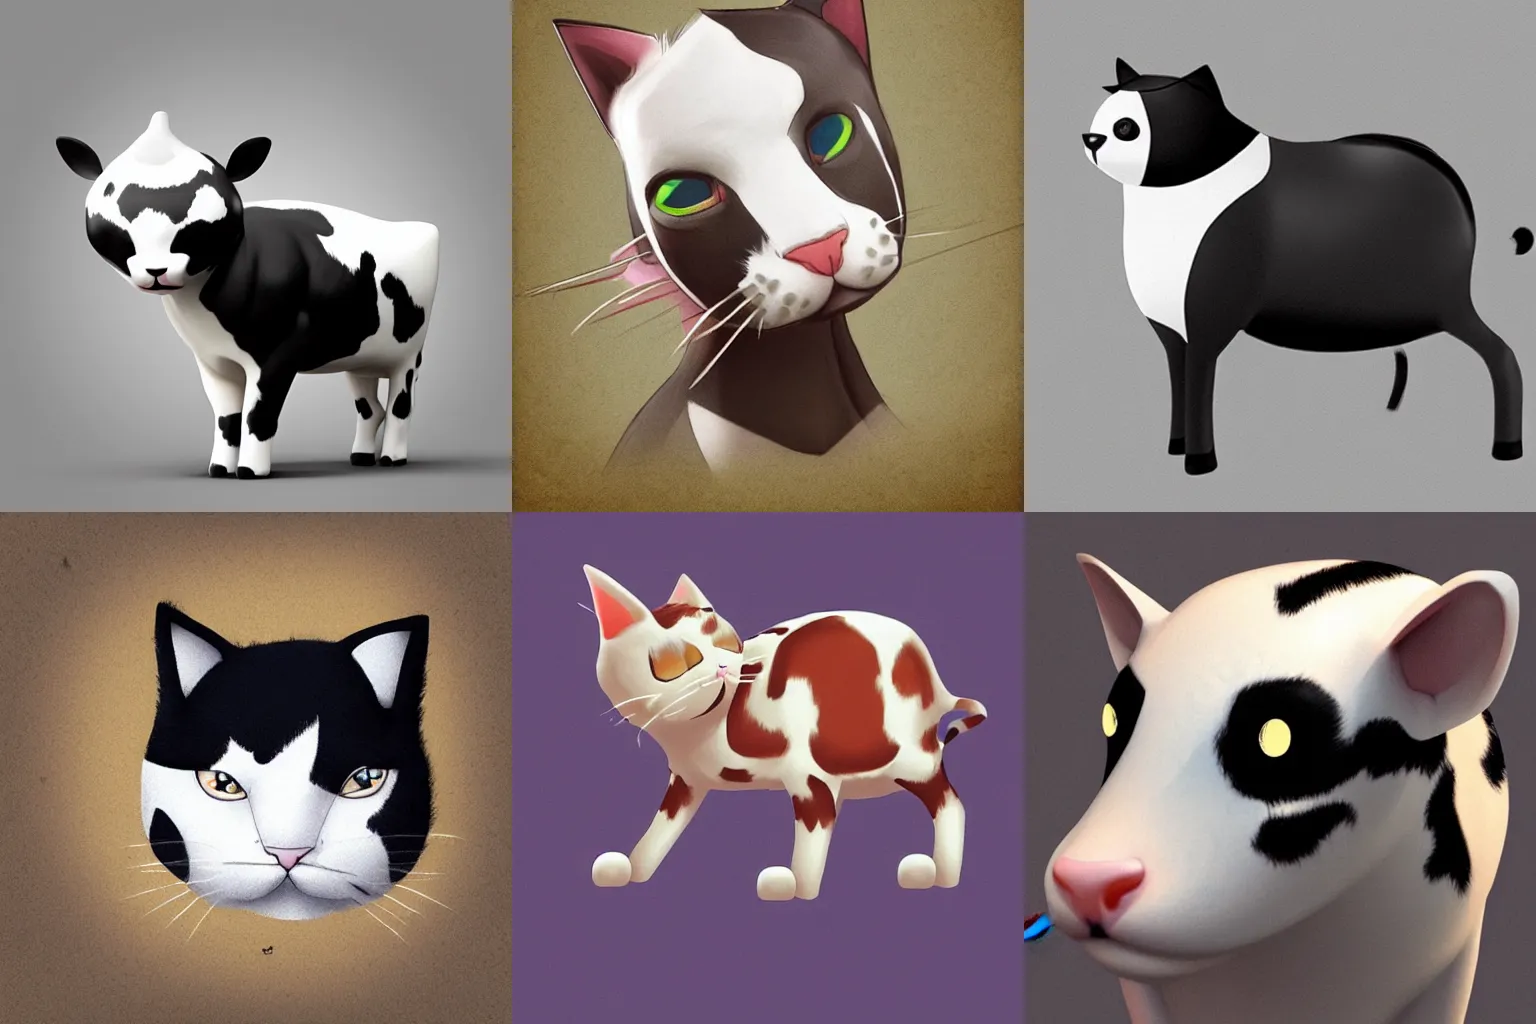 Prompt: A cat that looks like a cow, deviantart, artstation